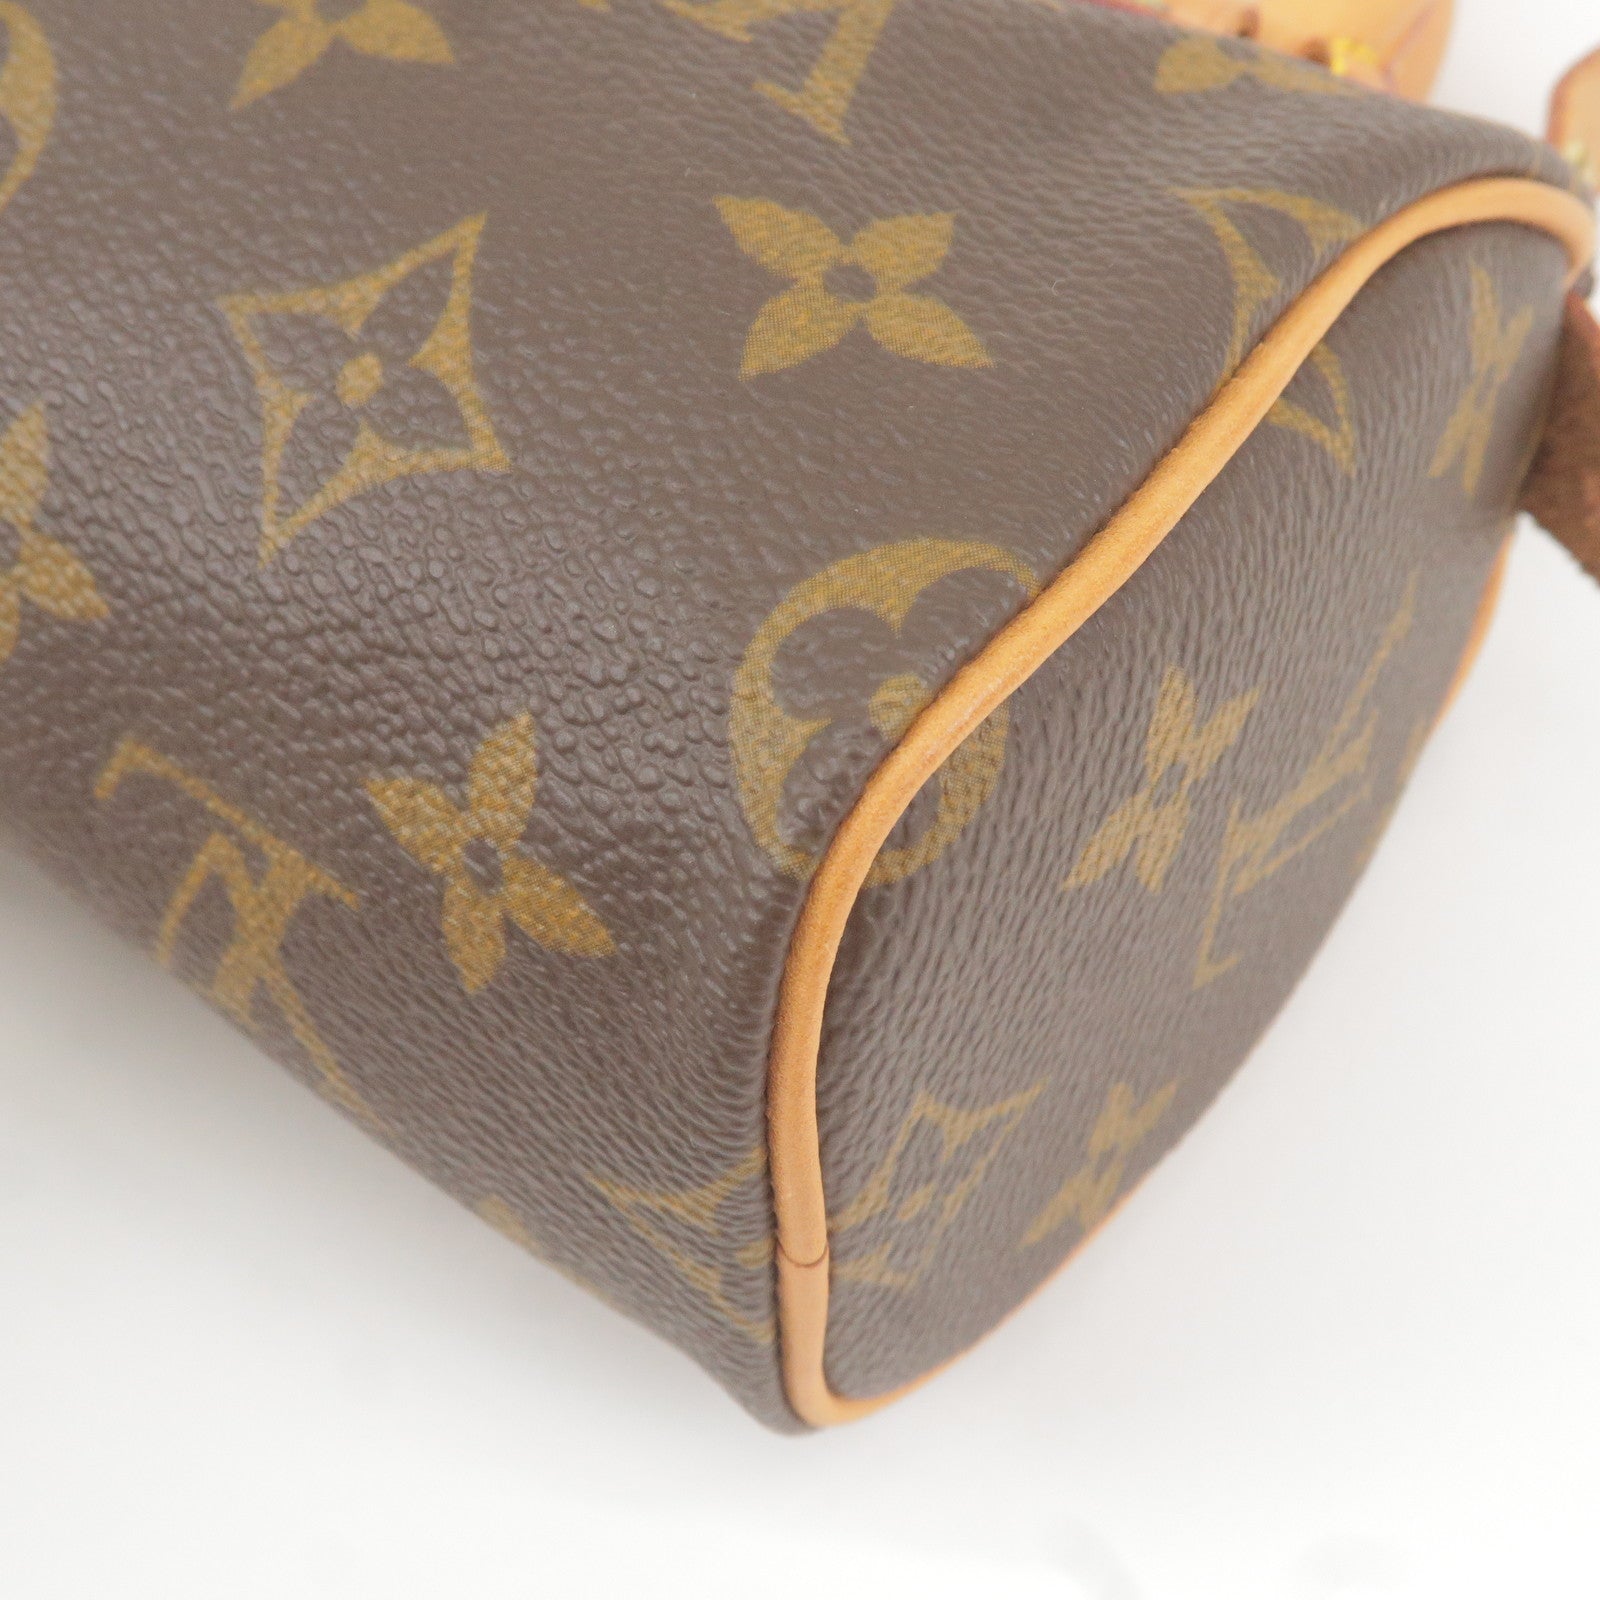 Louis Vuitton Ribera Mini Damier Brown Bag - Satchel